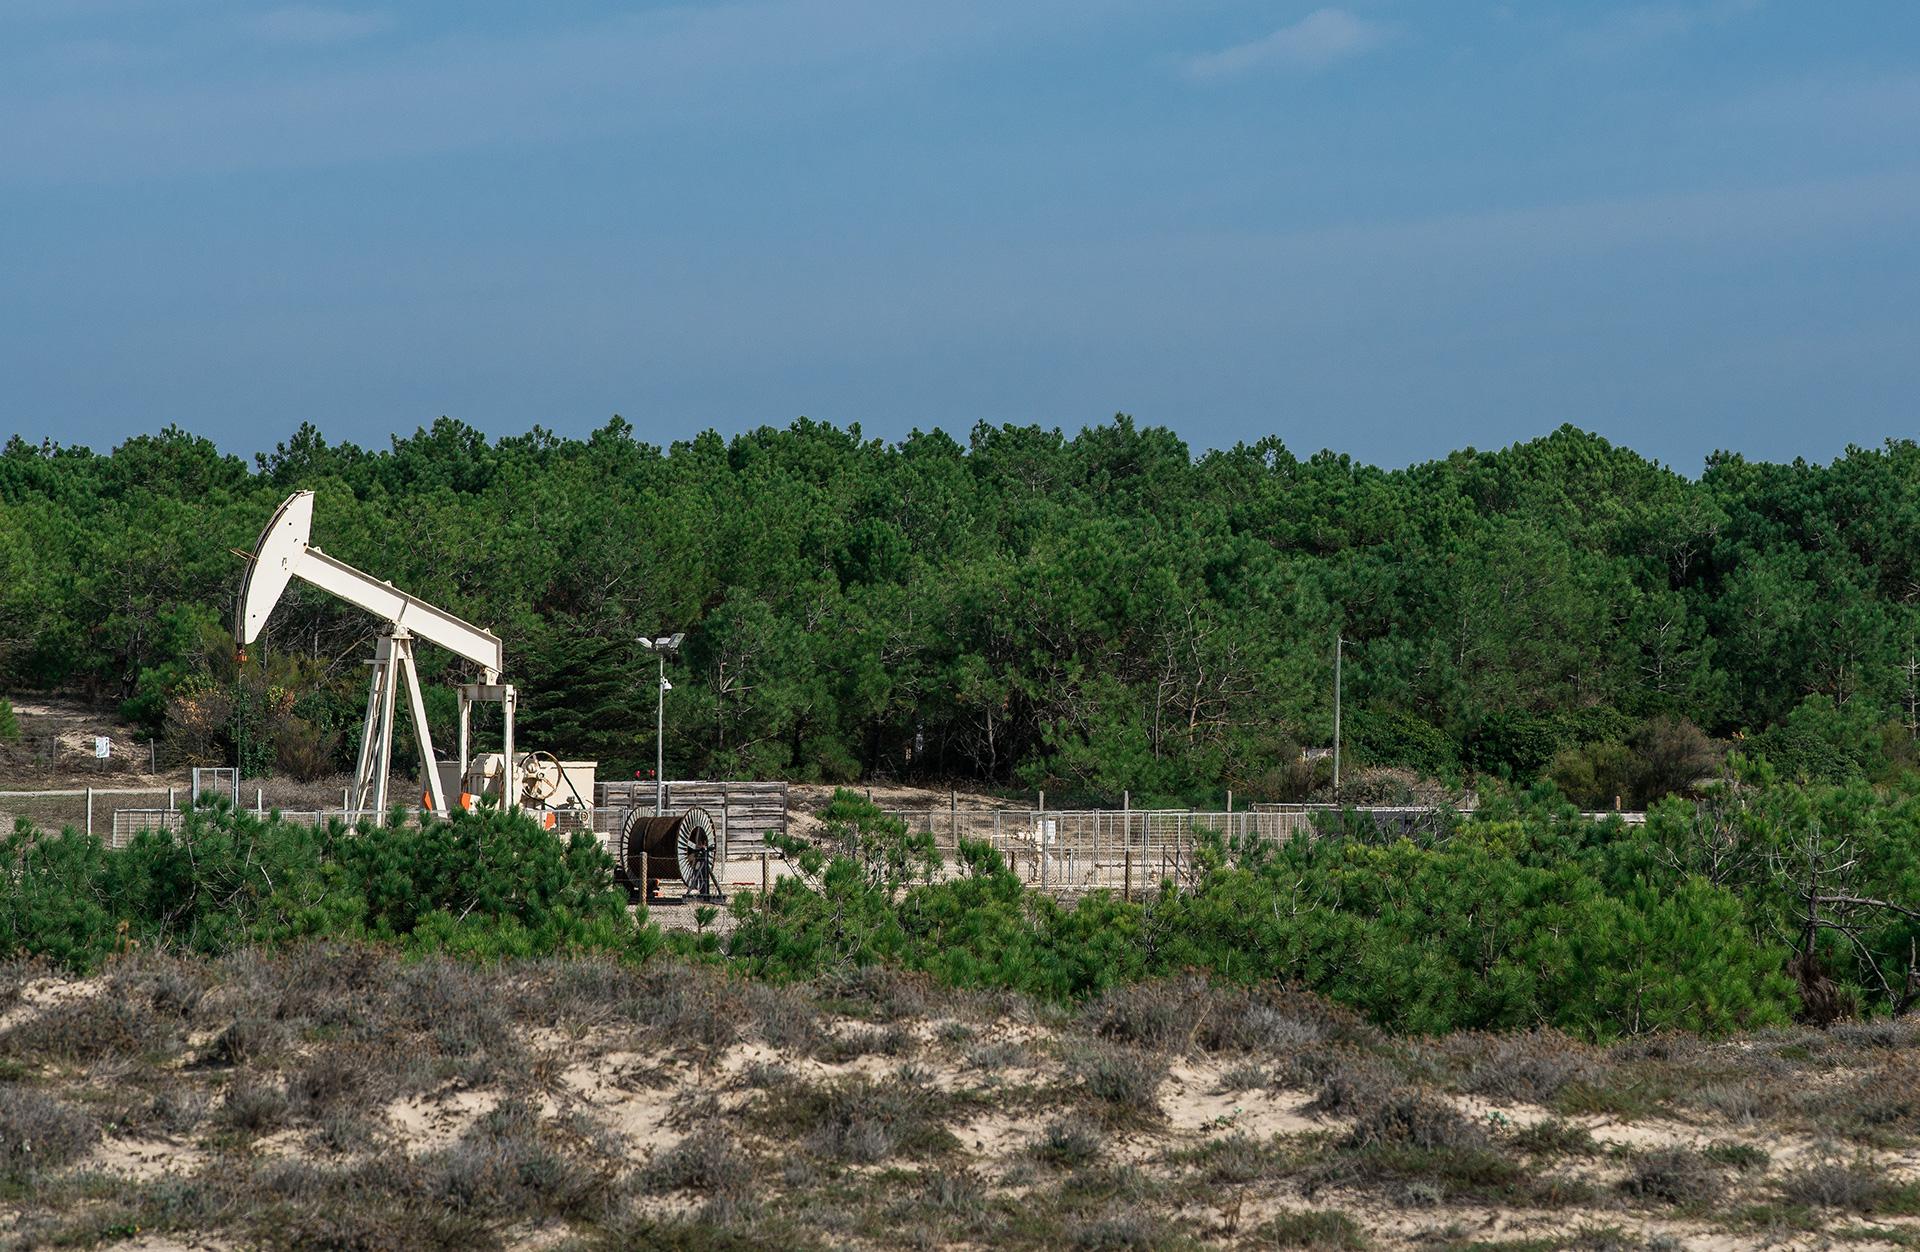  Oil wells 